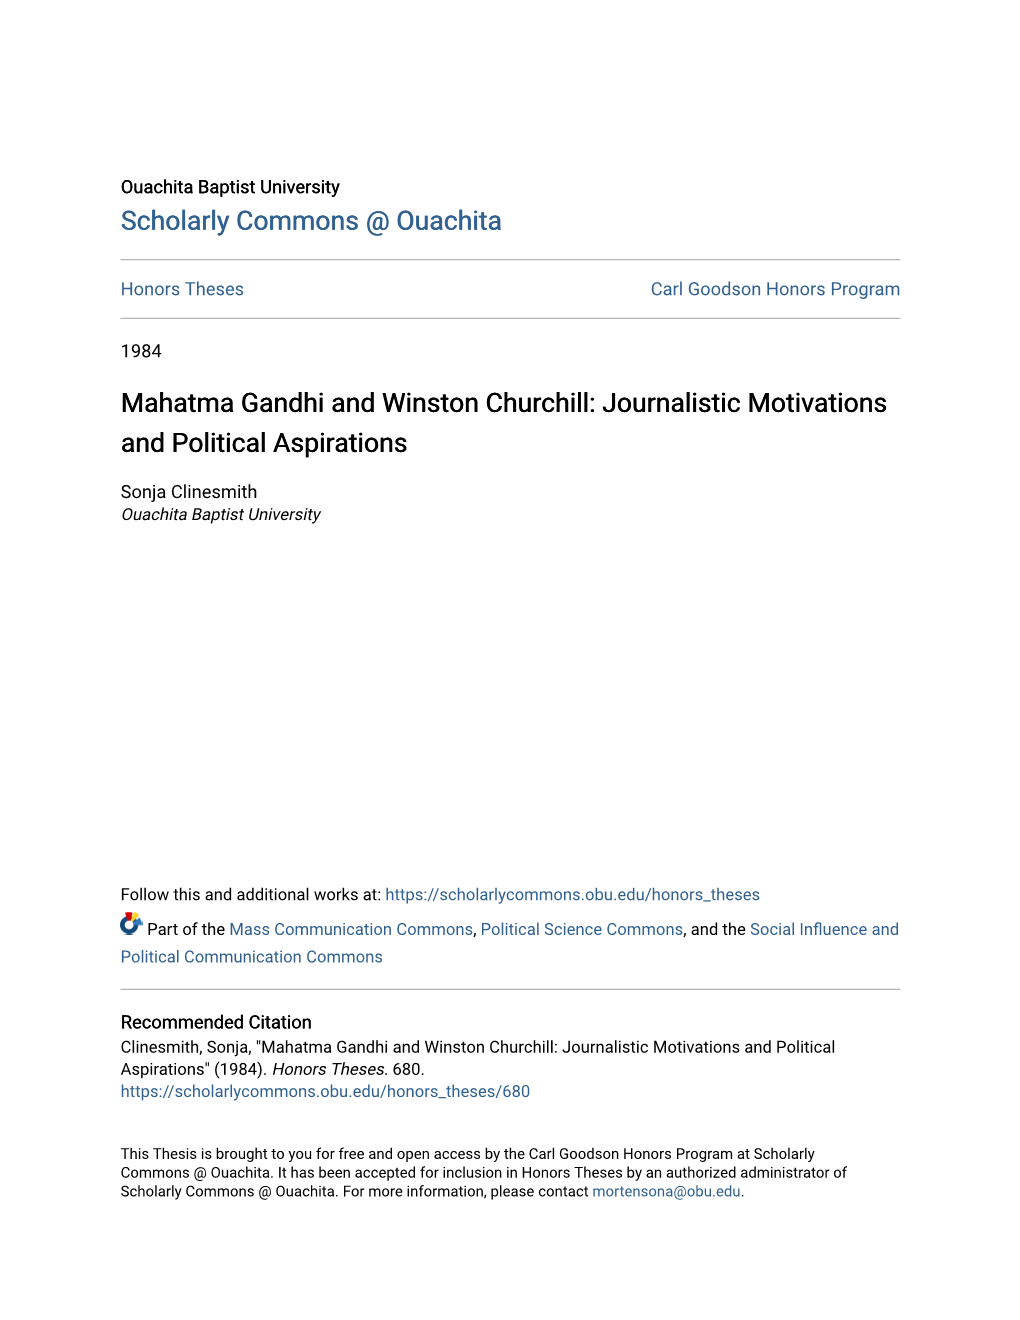 Mahatma Gandhi and Winston Churchill: Journalistic Motivations and Political Aspirations